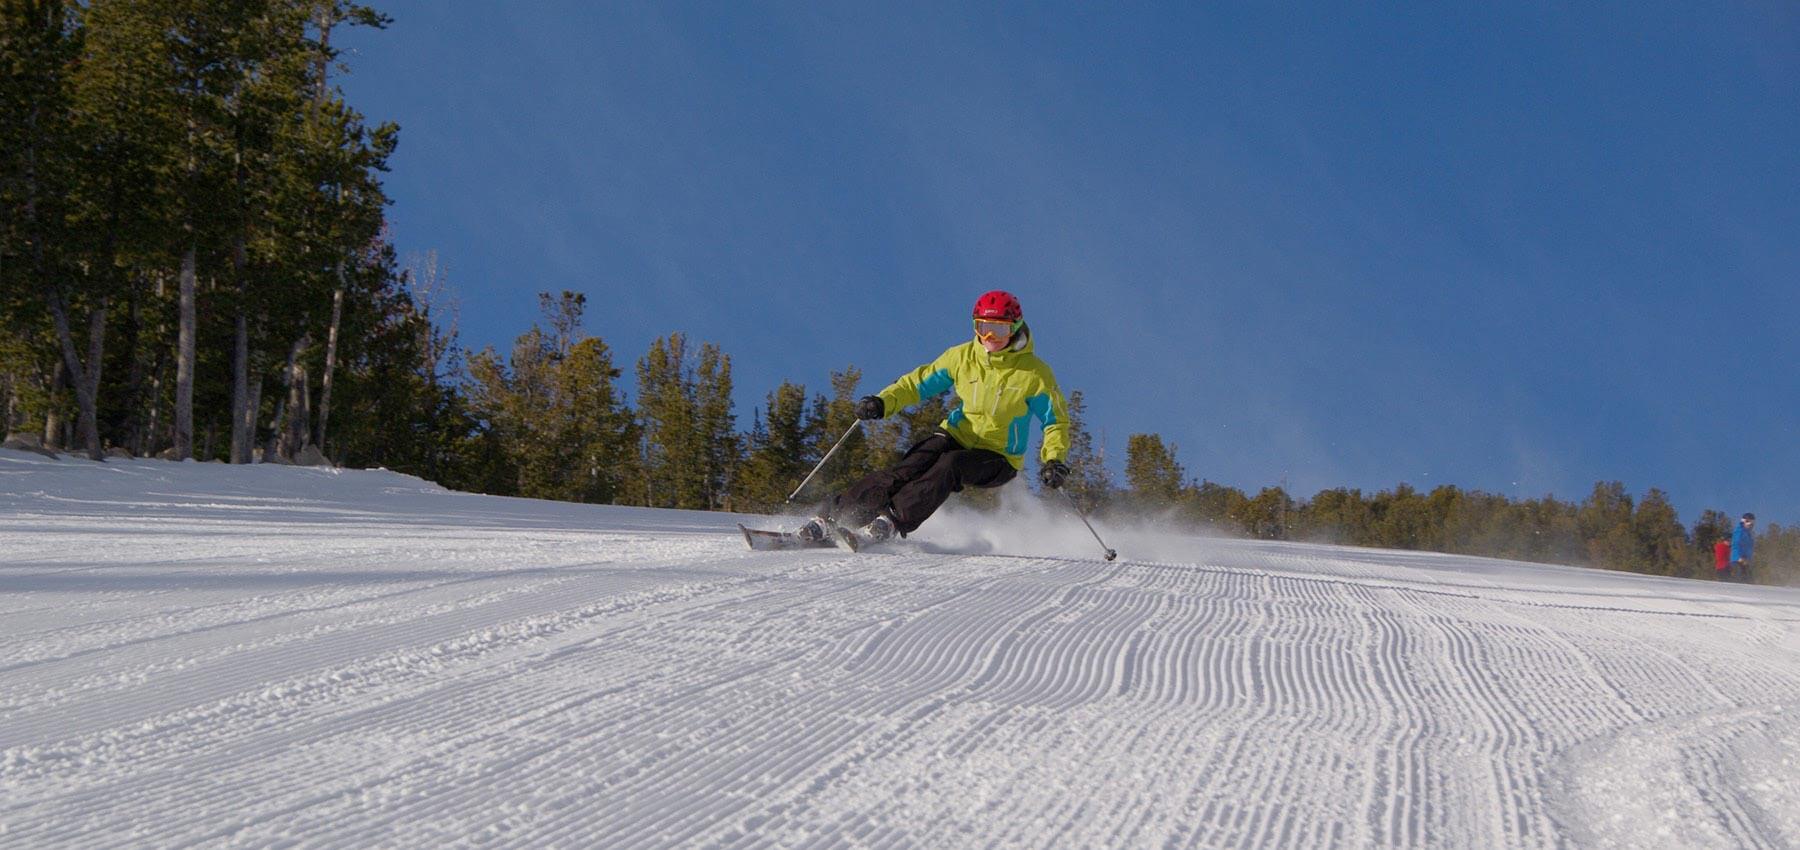 skier carving a turn on groomed run under blue sky